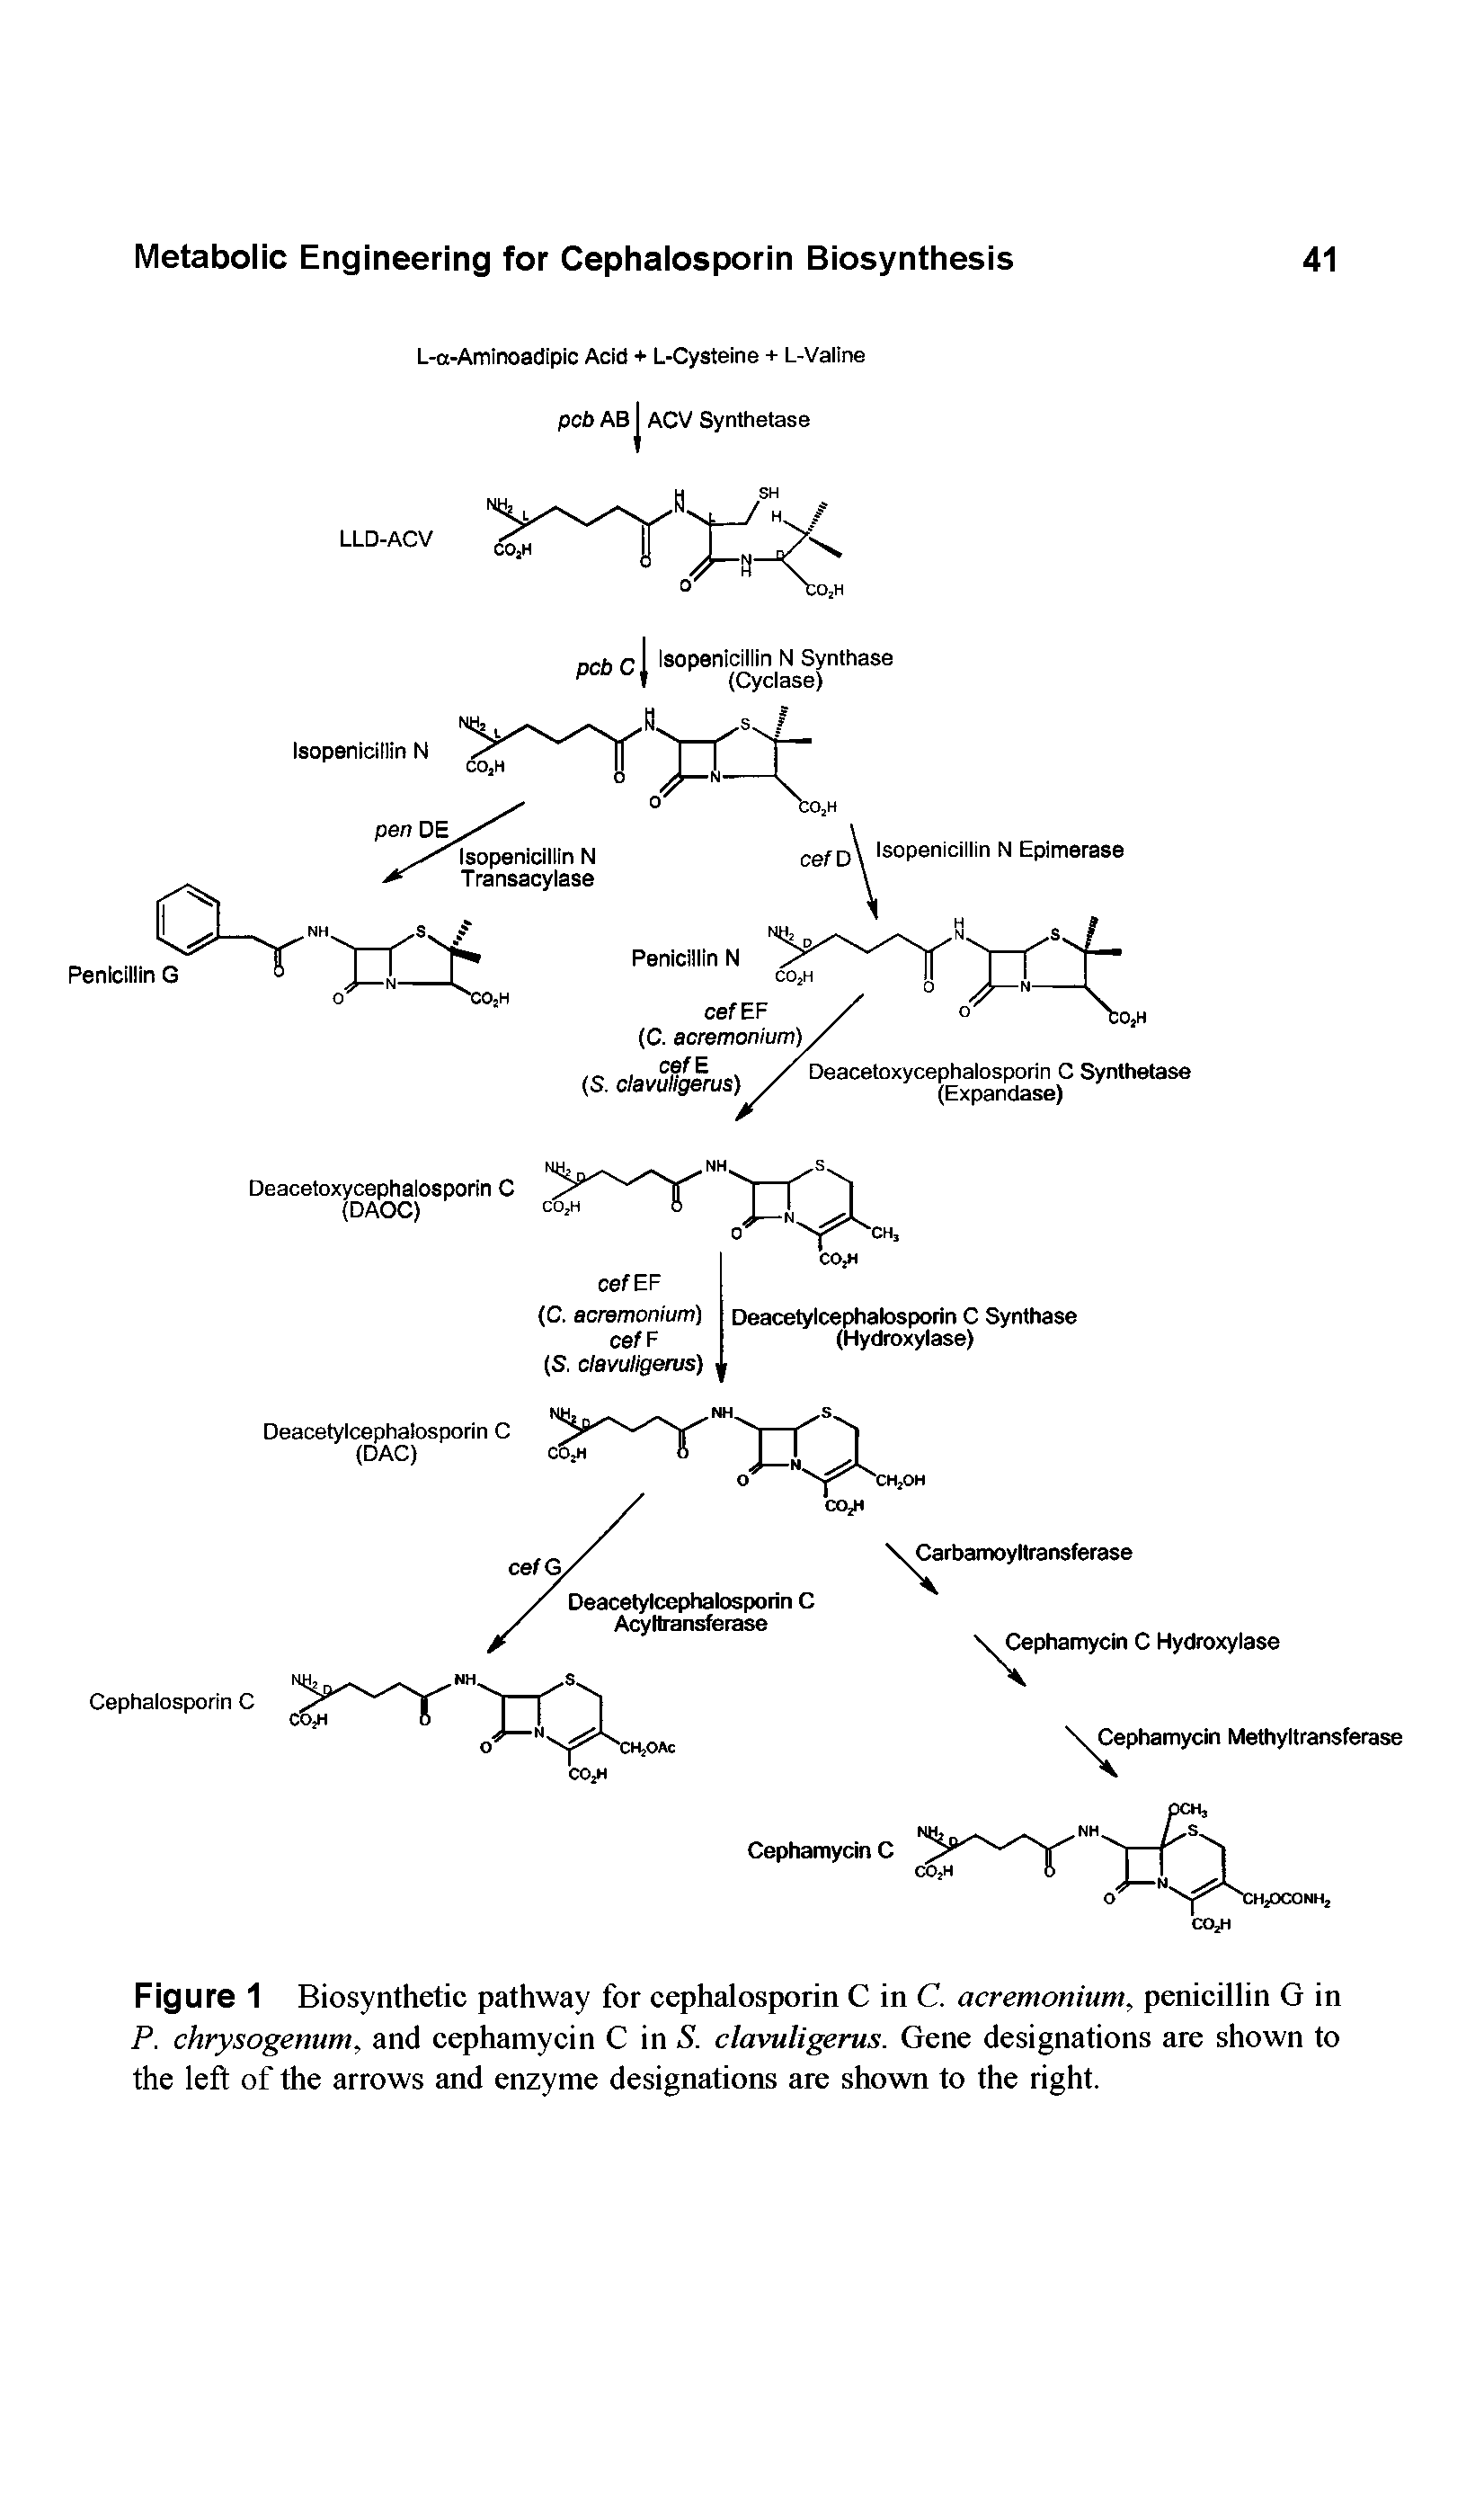 Figure 1 Biosynthetic pathway for cephalosporin C in C. acremonium, penicillin G in P. chrysogenum, and cephamycin C in S. clavuligerus. Gene designations are shown to the left of the arrows and enzyme designations are shown to the right.